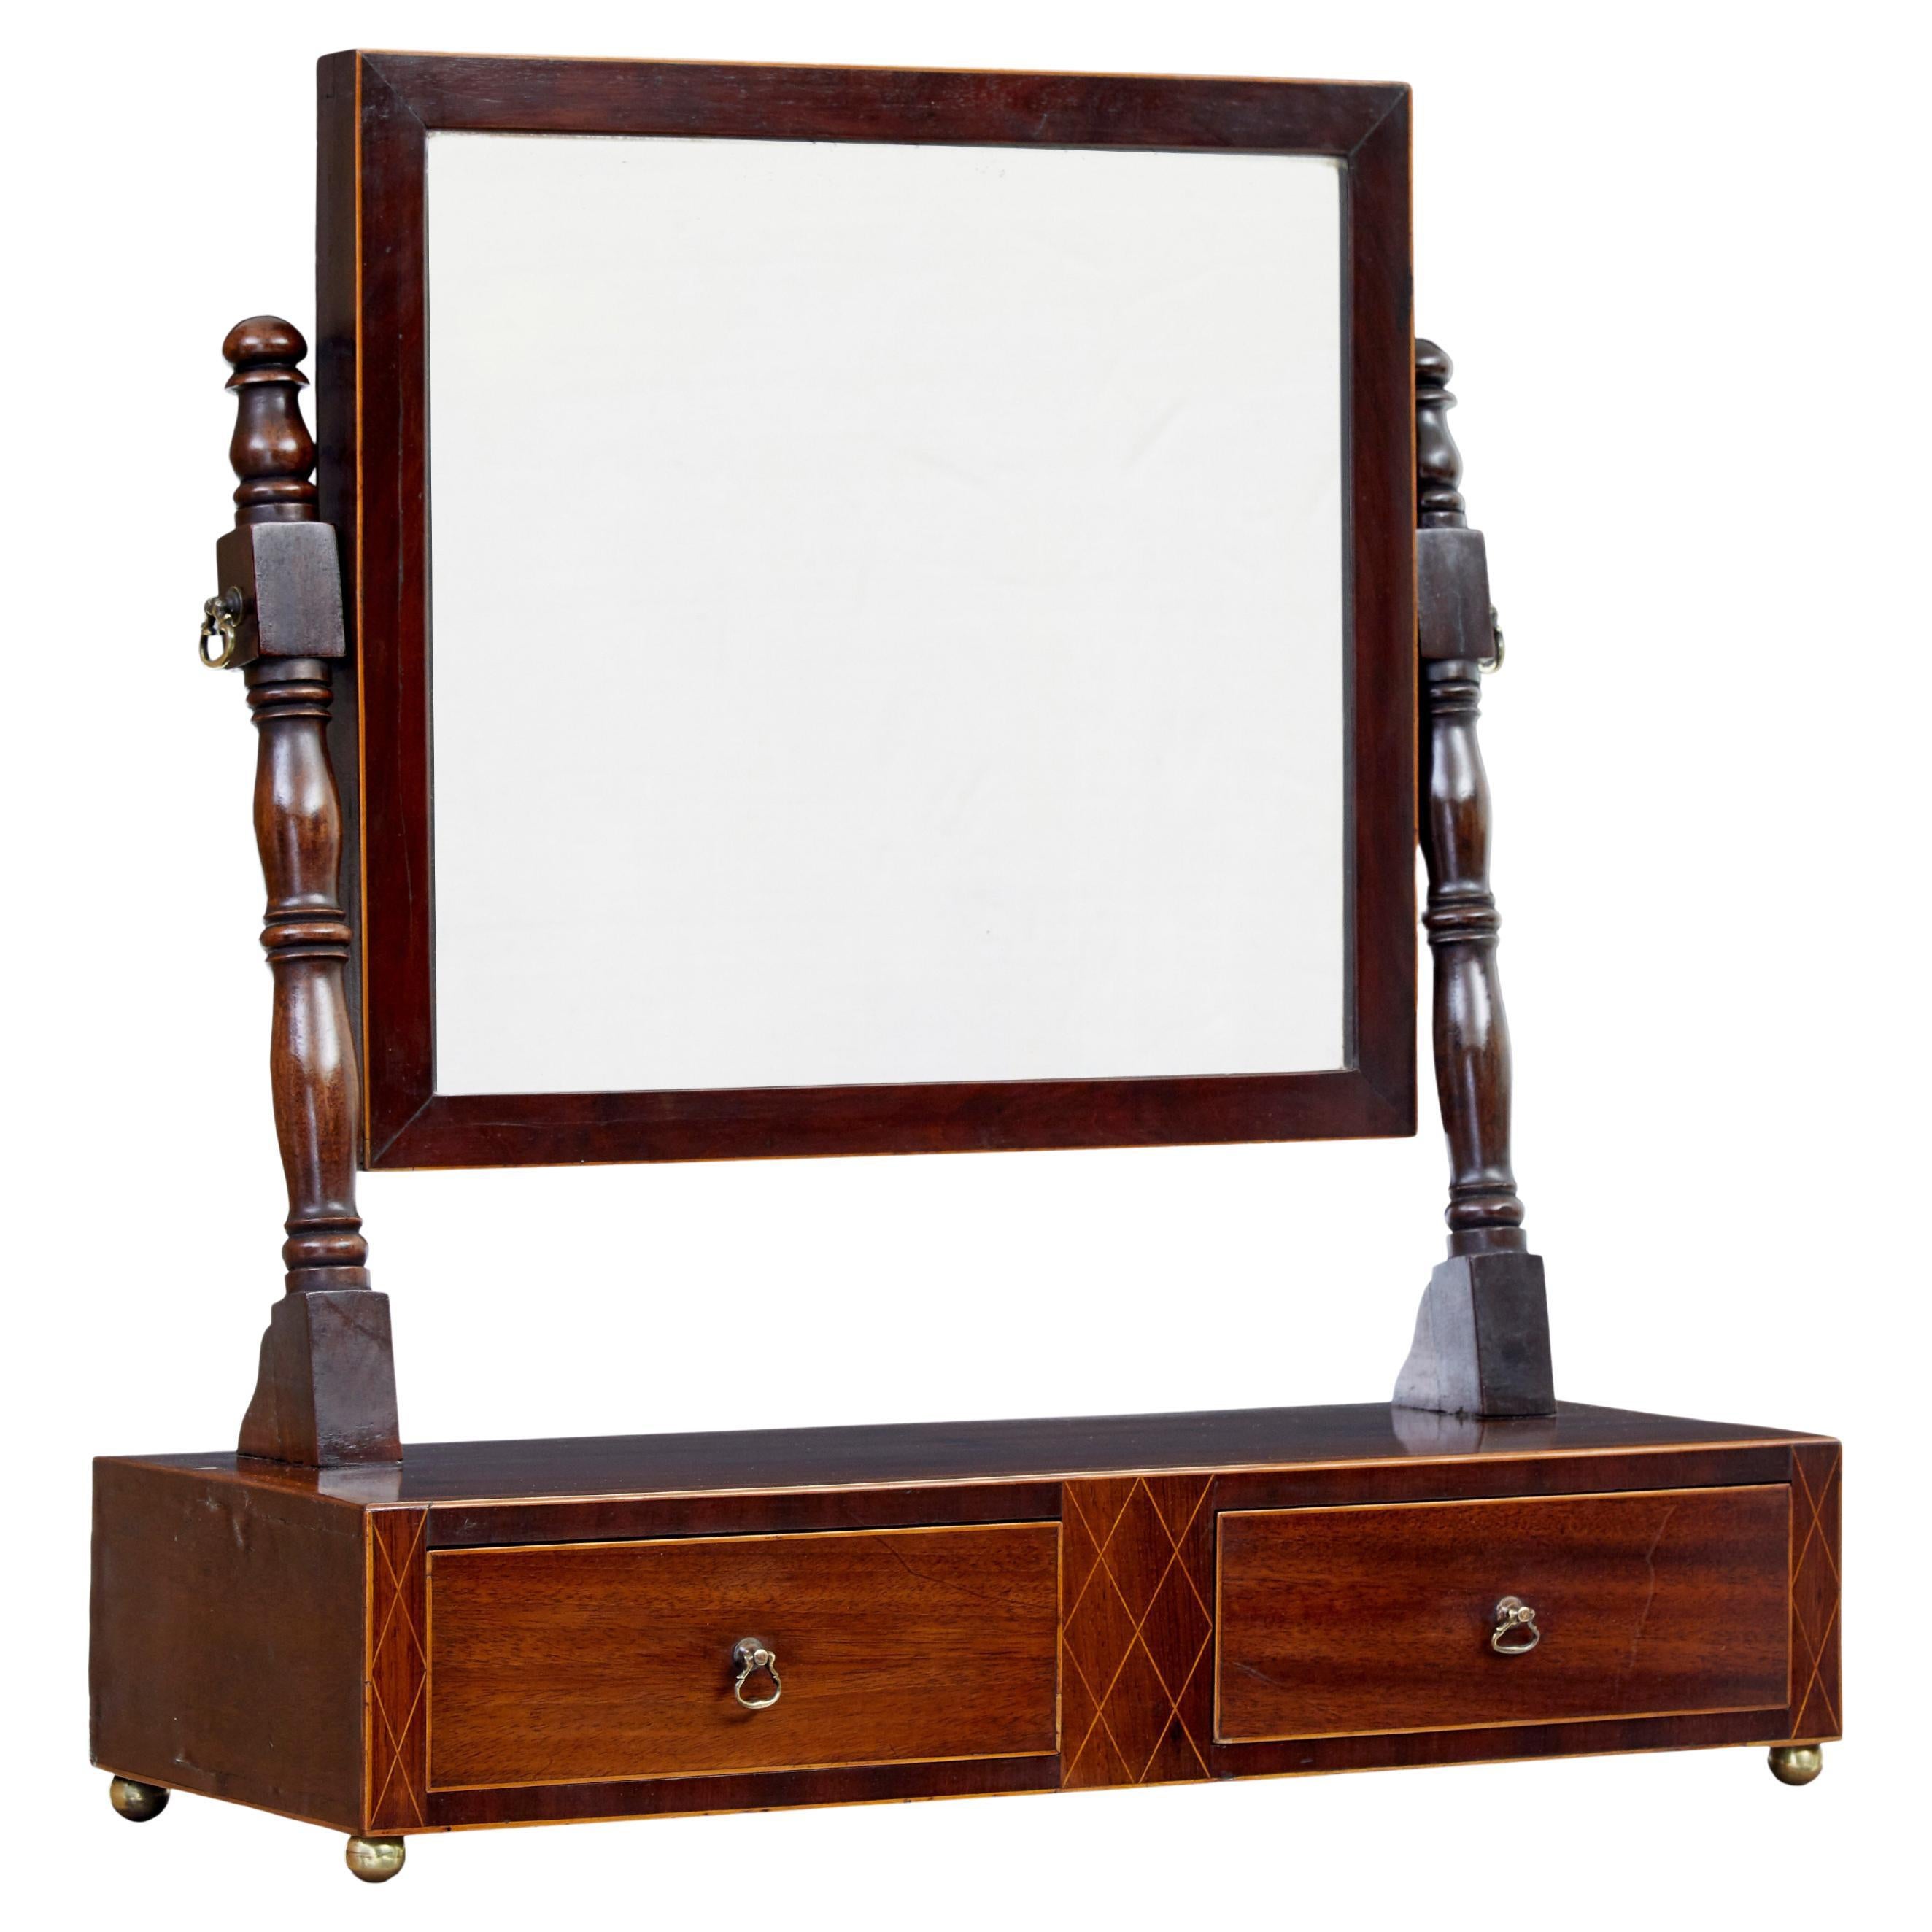 19th century Victorian mahogany toilet mirror For Sale